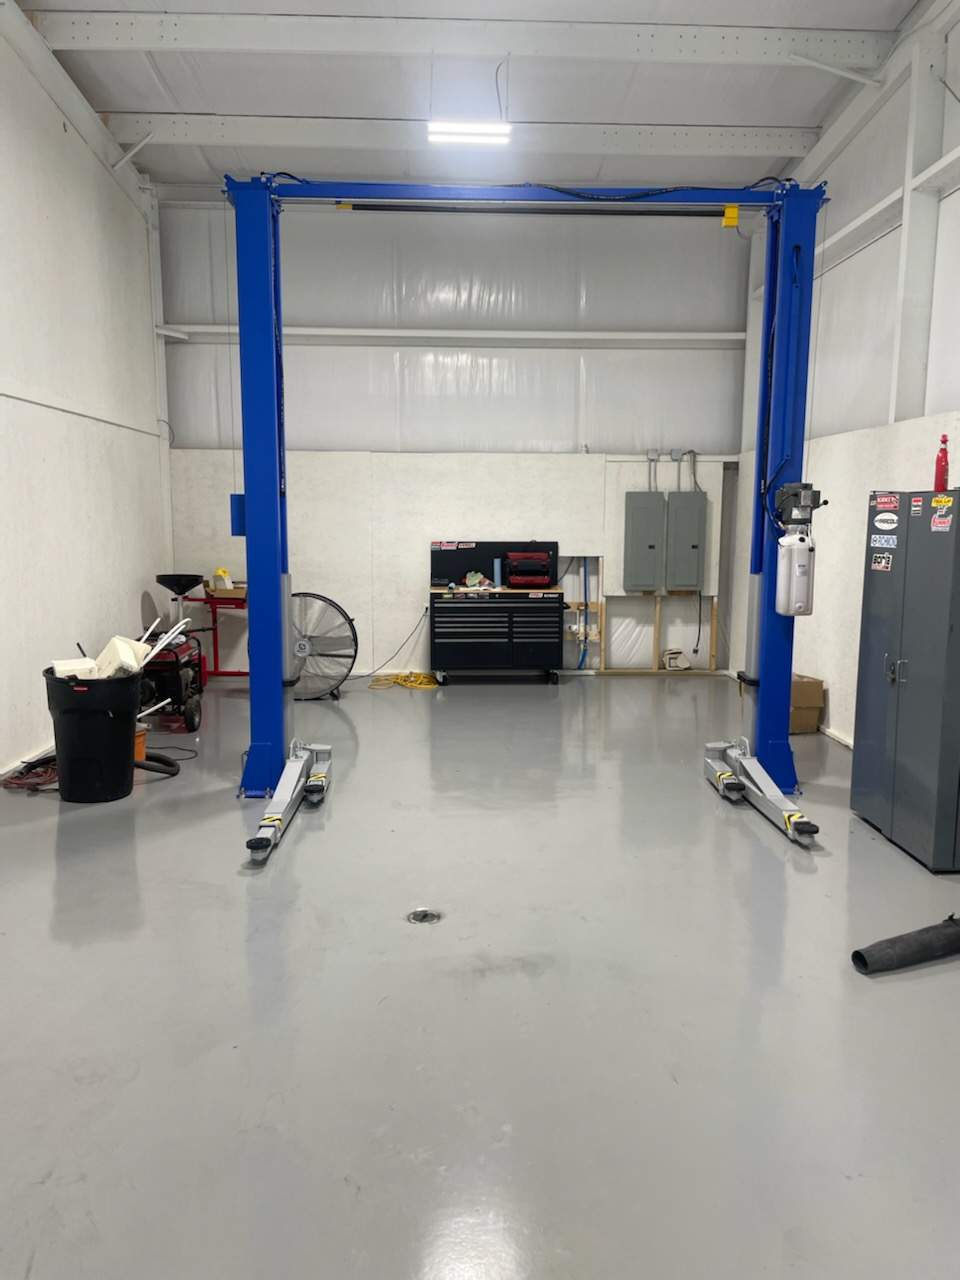 2-post hydraulic lift installation in garage